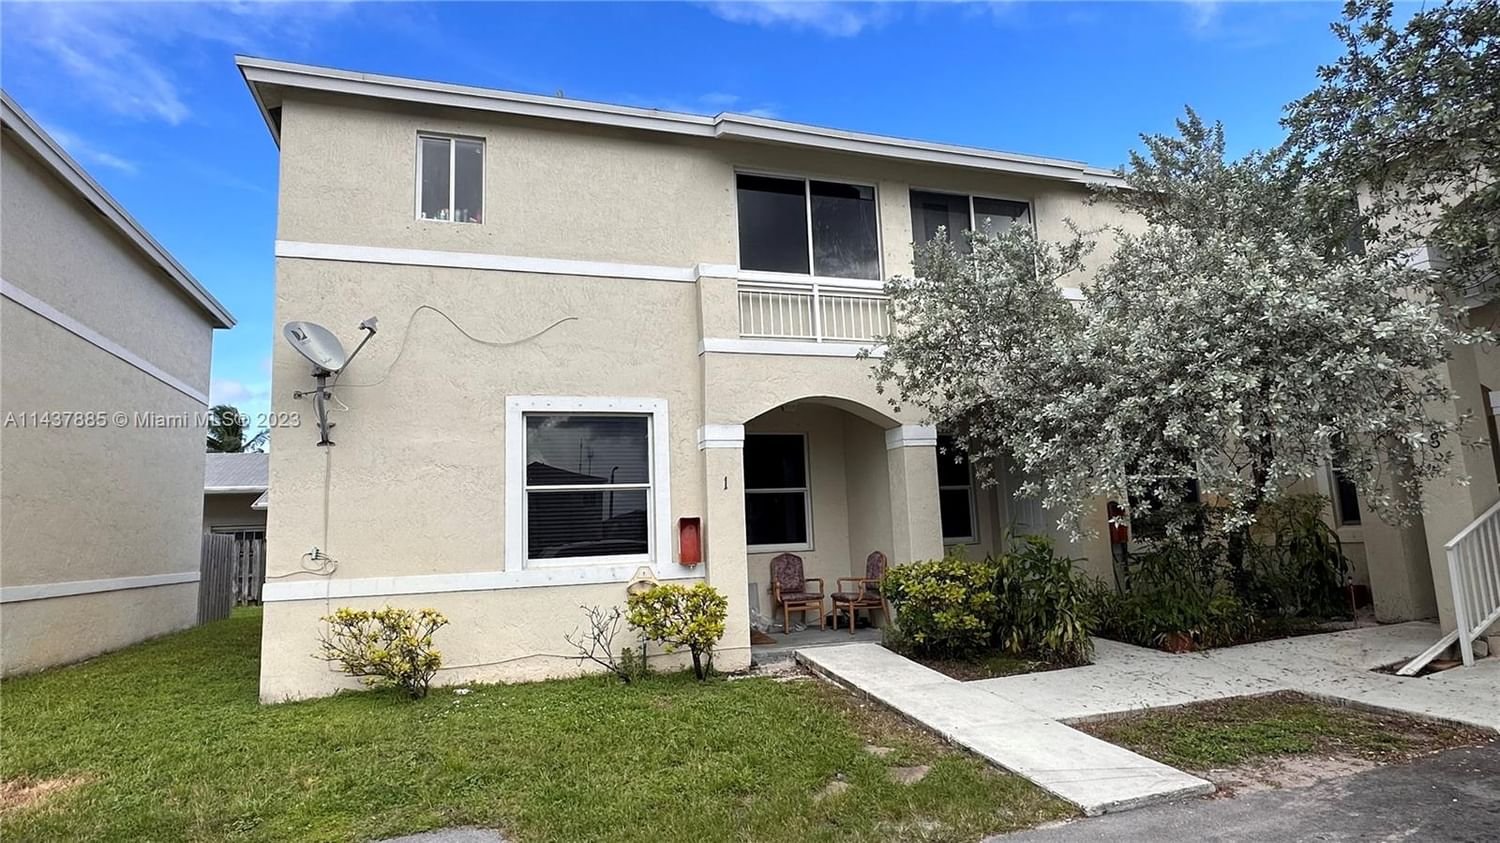 Real estate property located at 21245 8th Pl #2, Miami-Dade County, Miami, FL